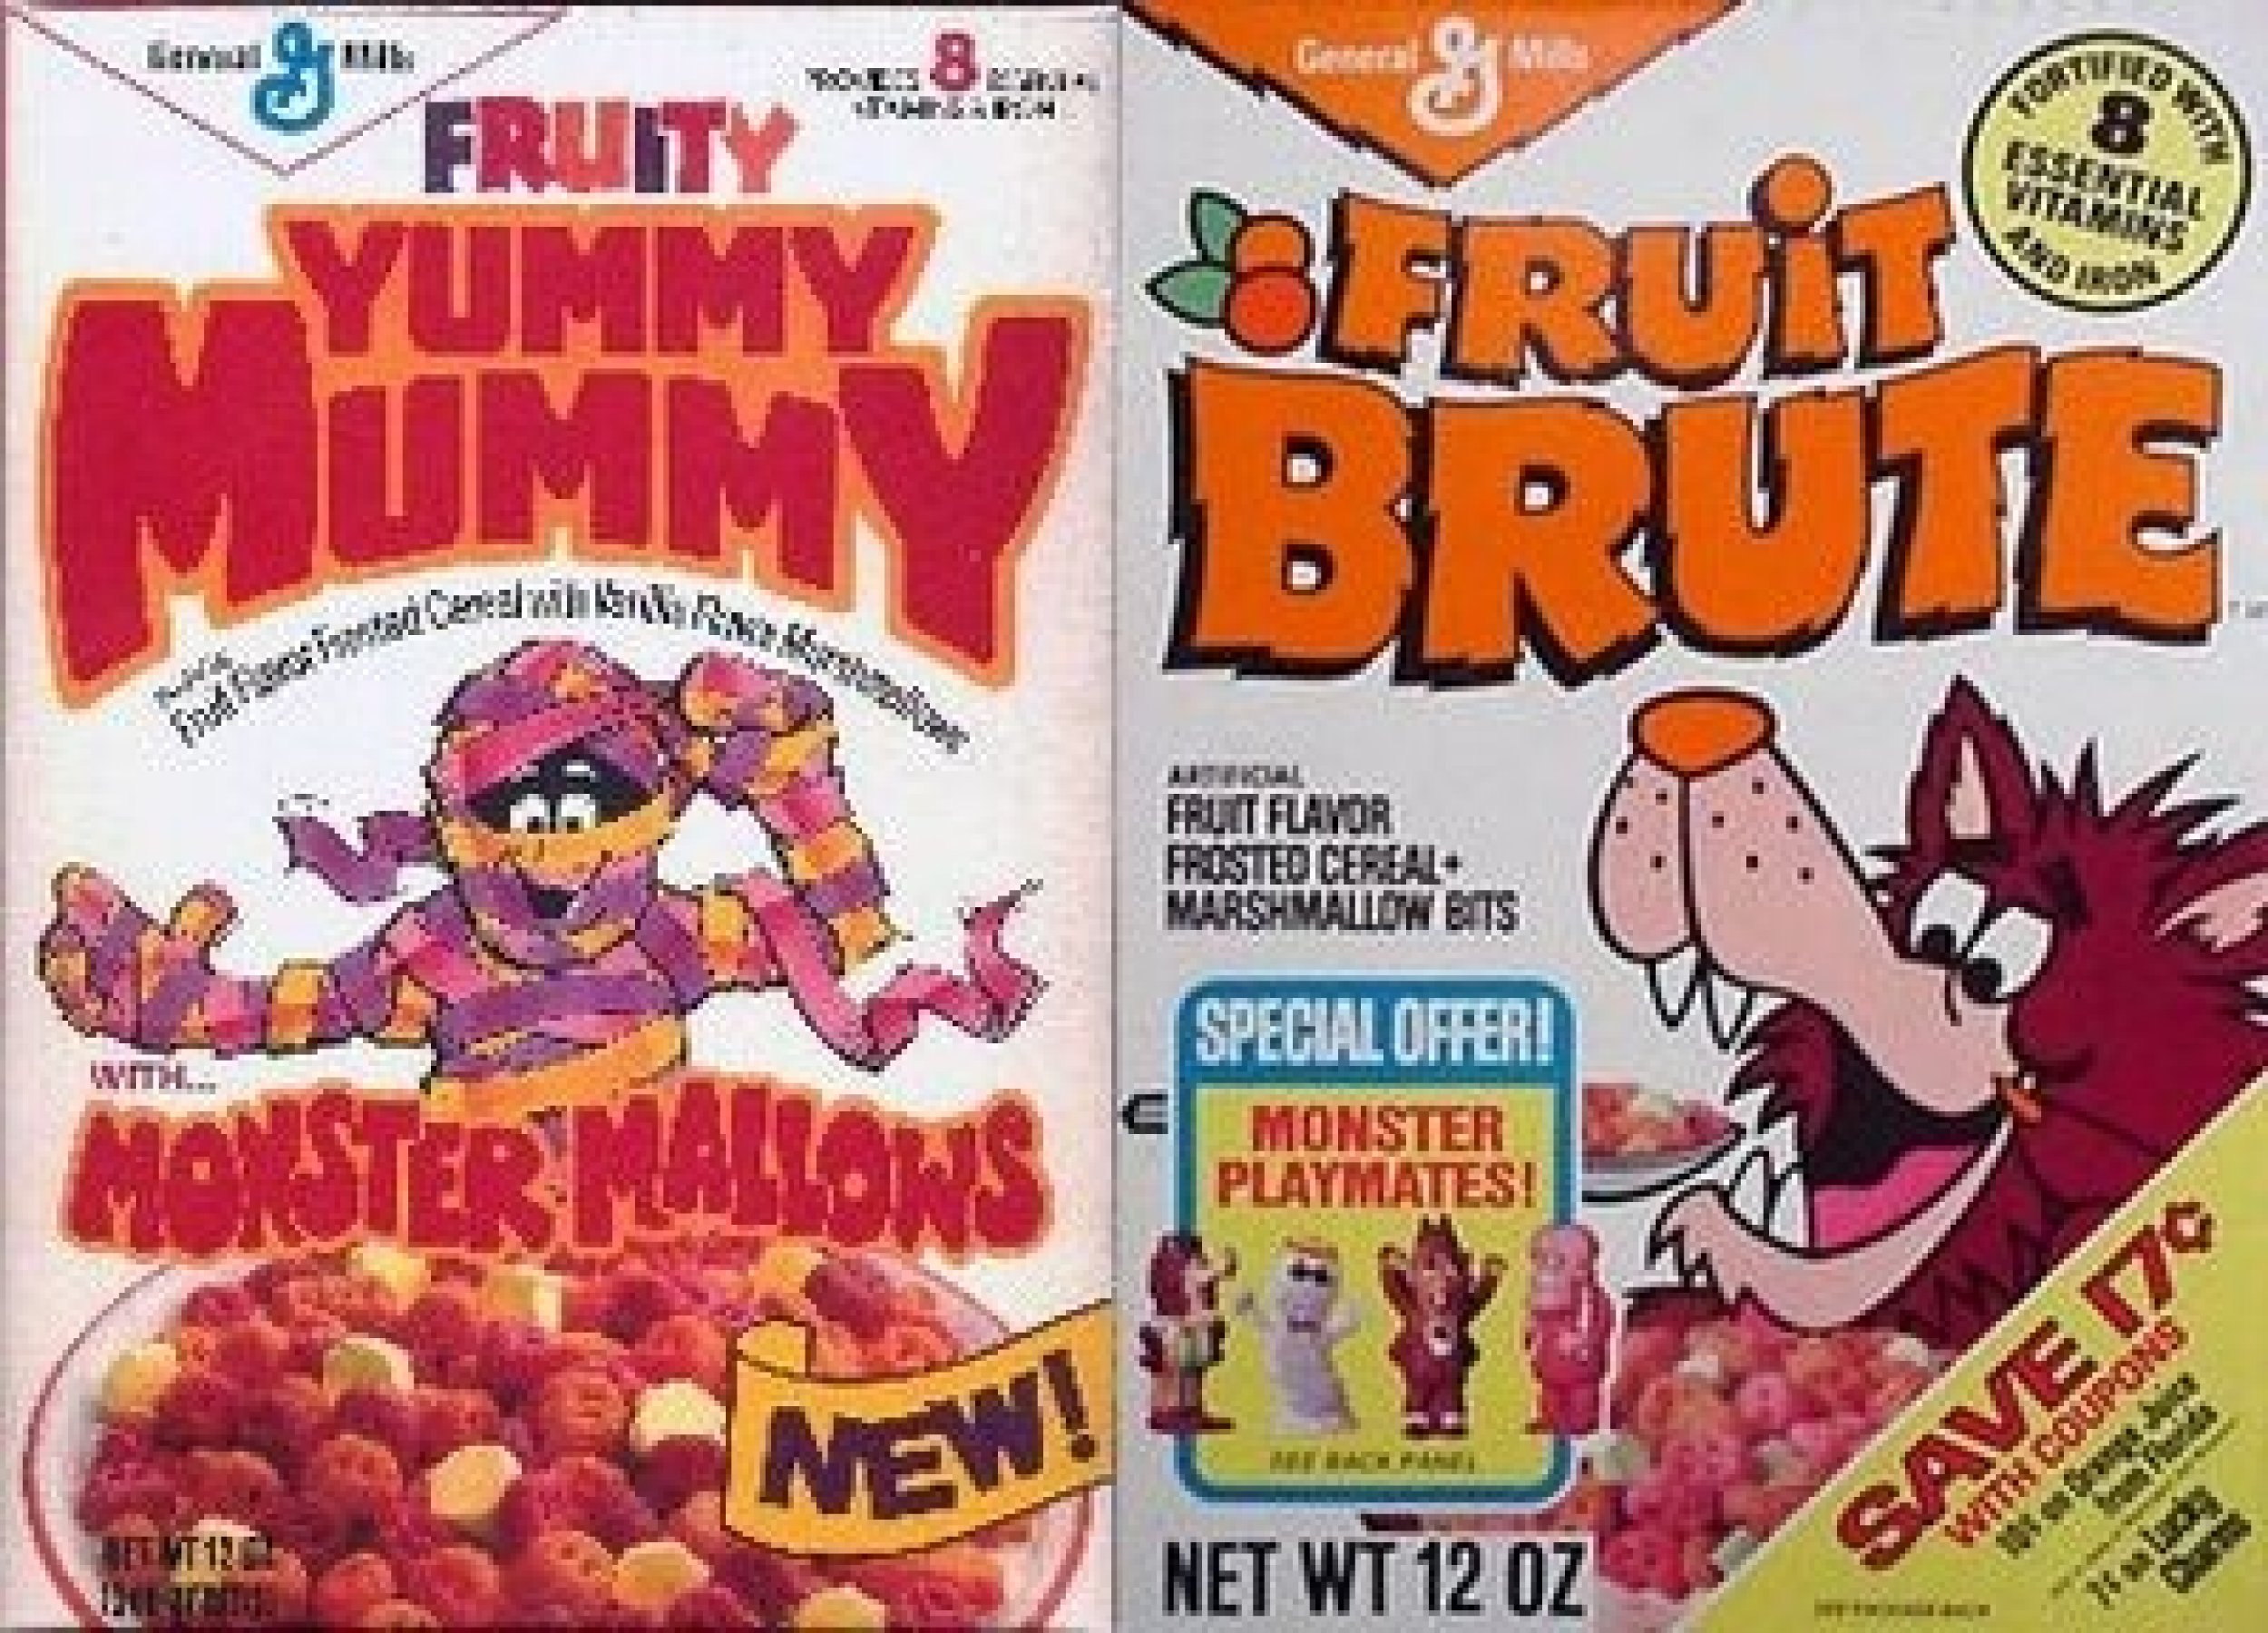 Fruity Yummy Mummy  Fruit Brute